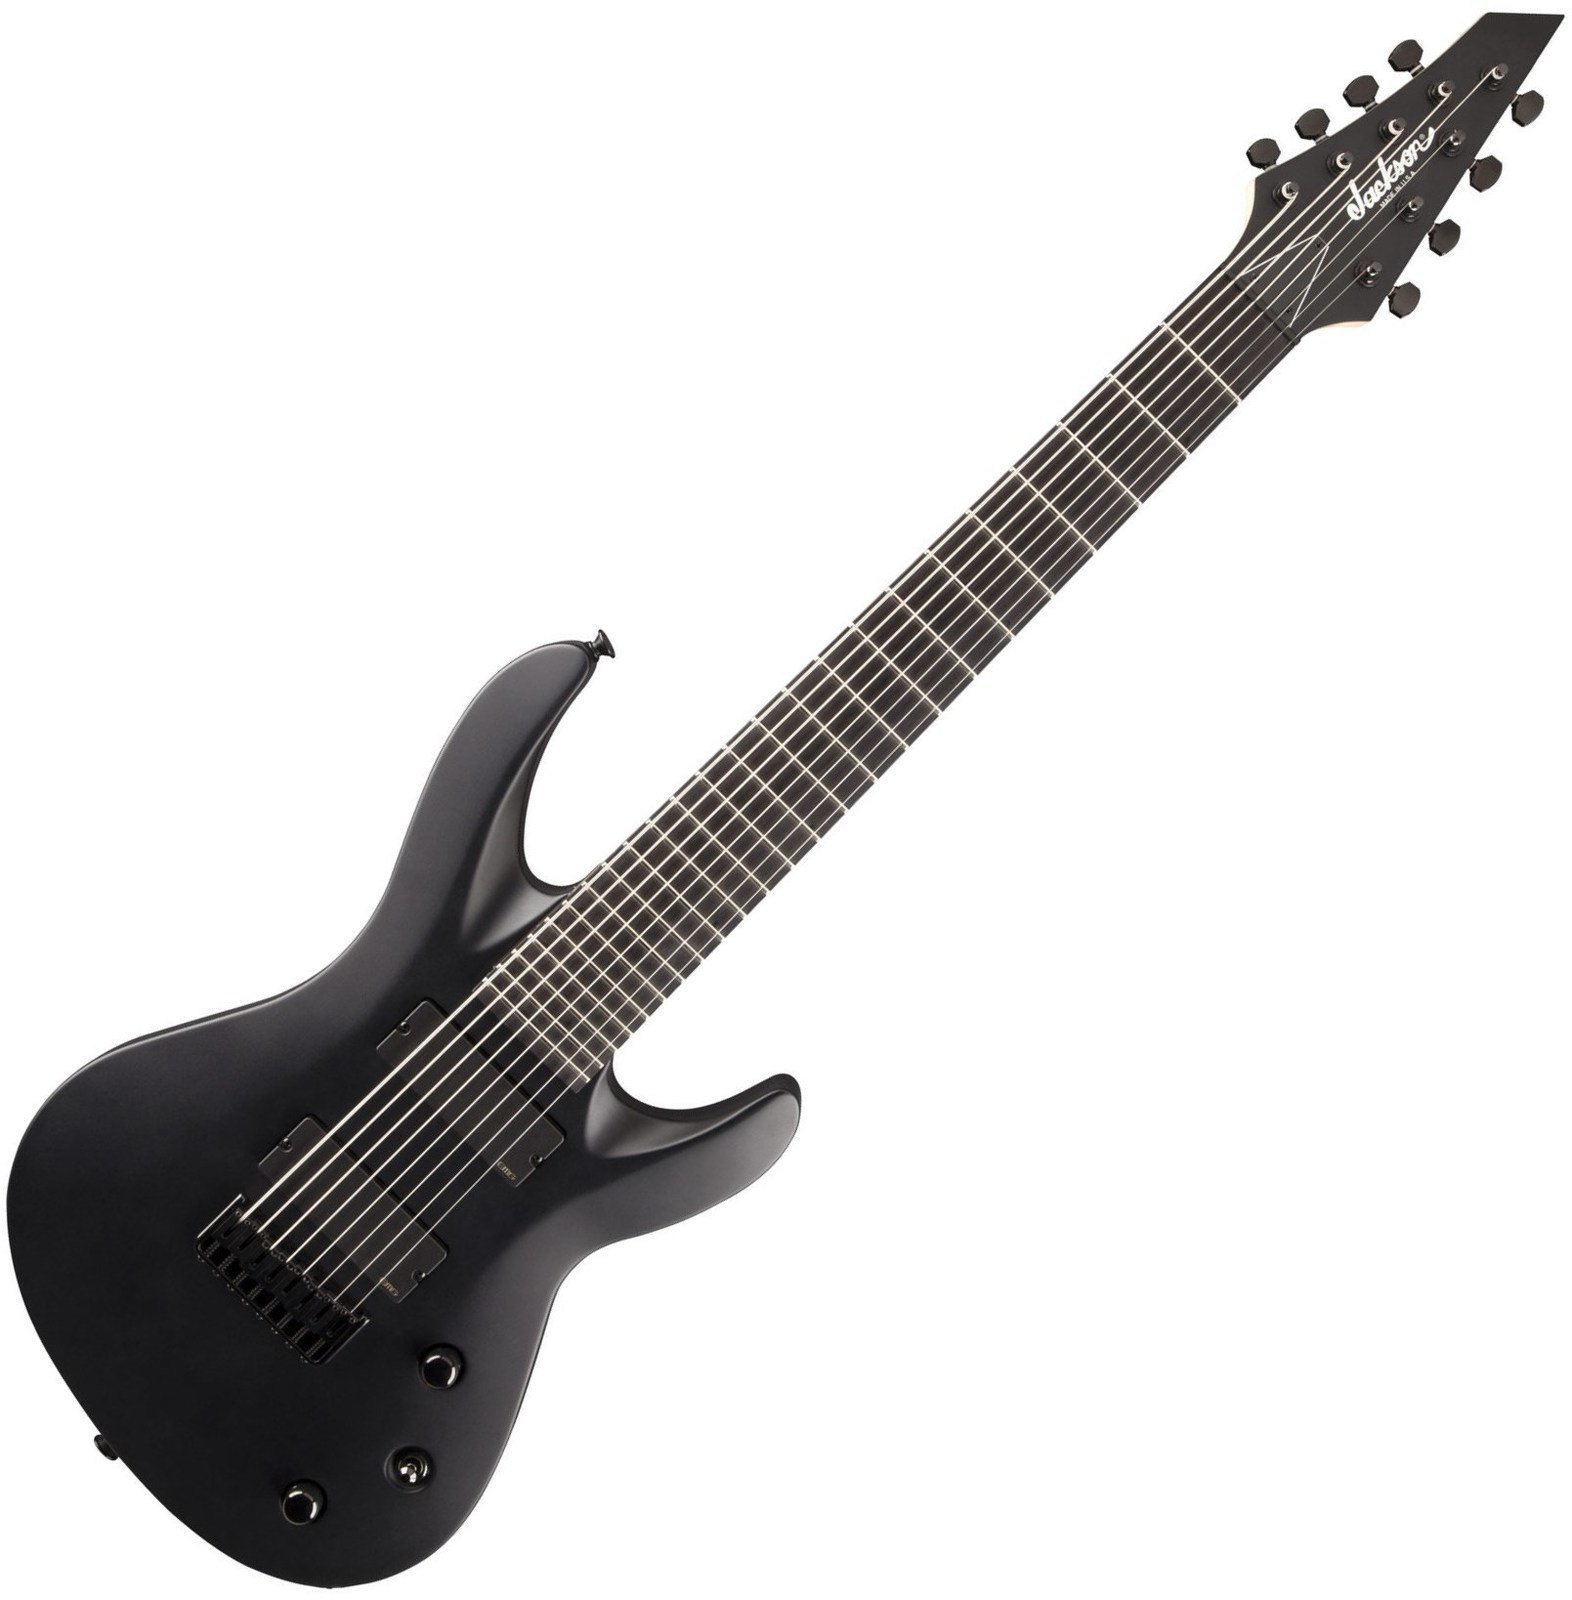 8-string electric guitar Jackson USA Select B8 Satin Black